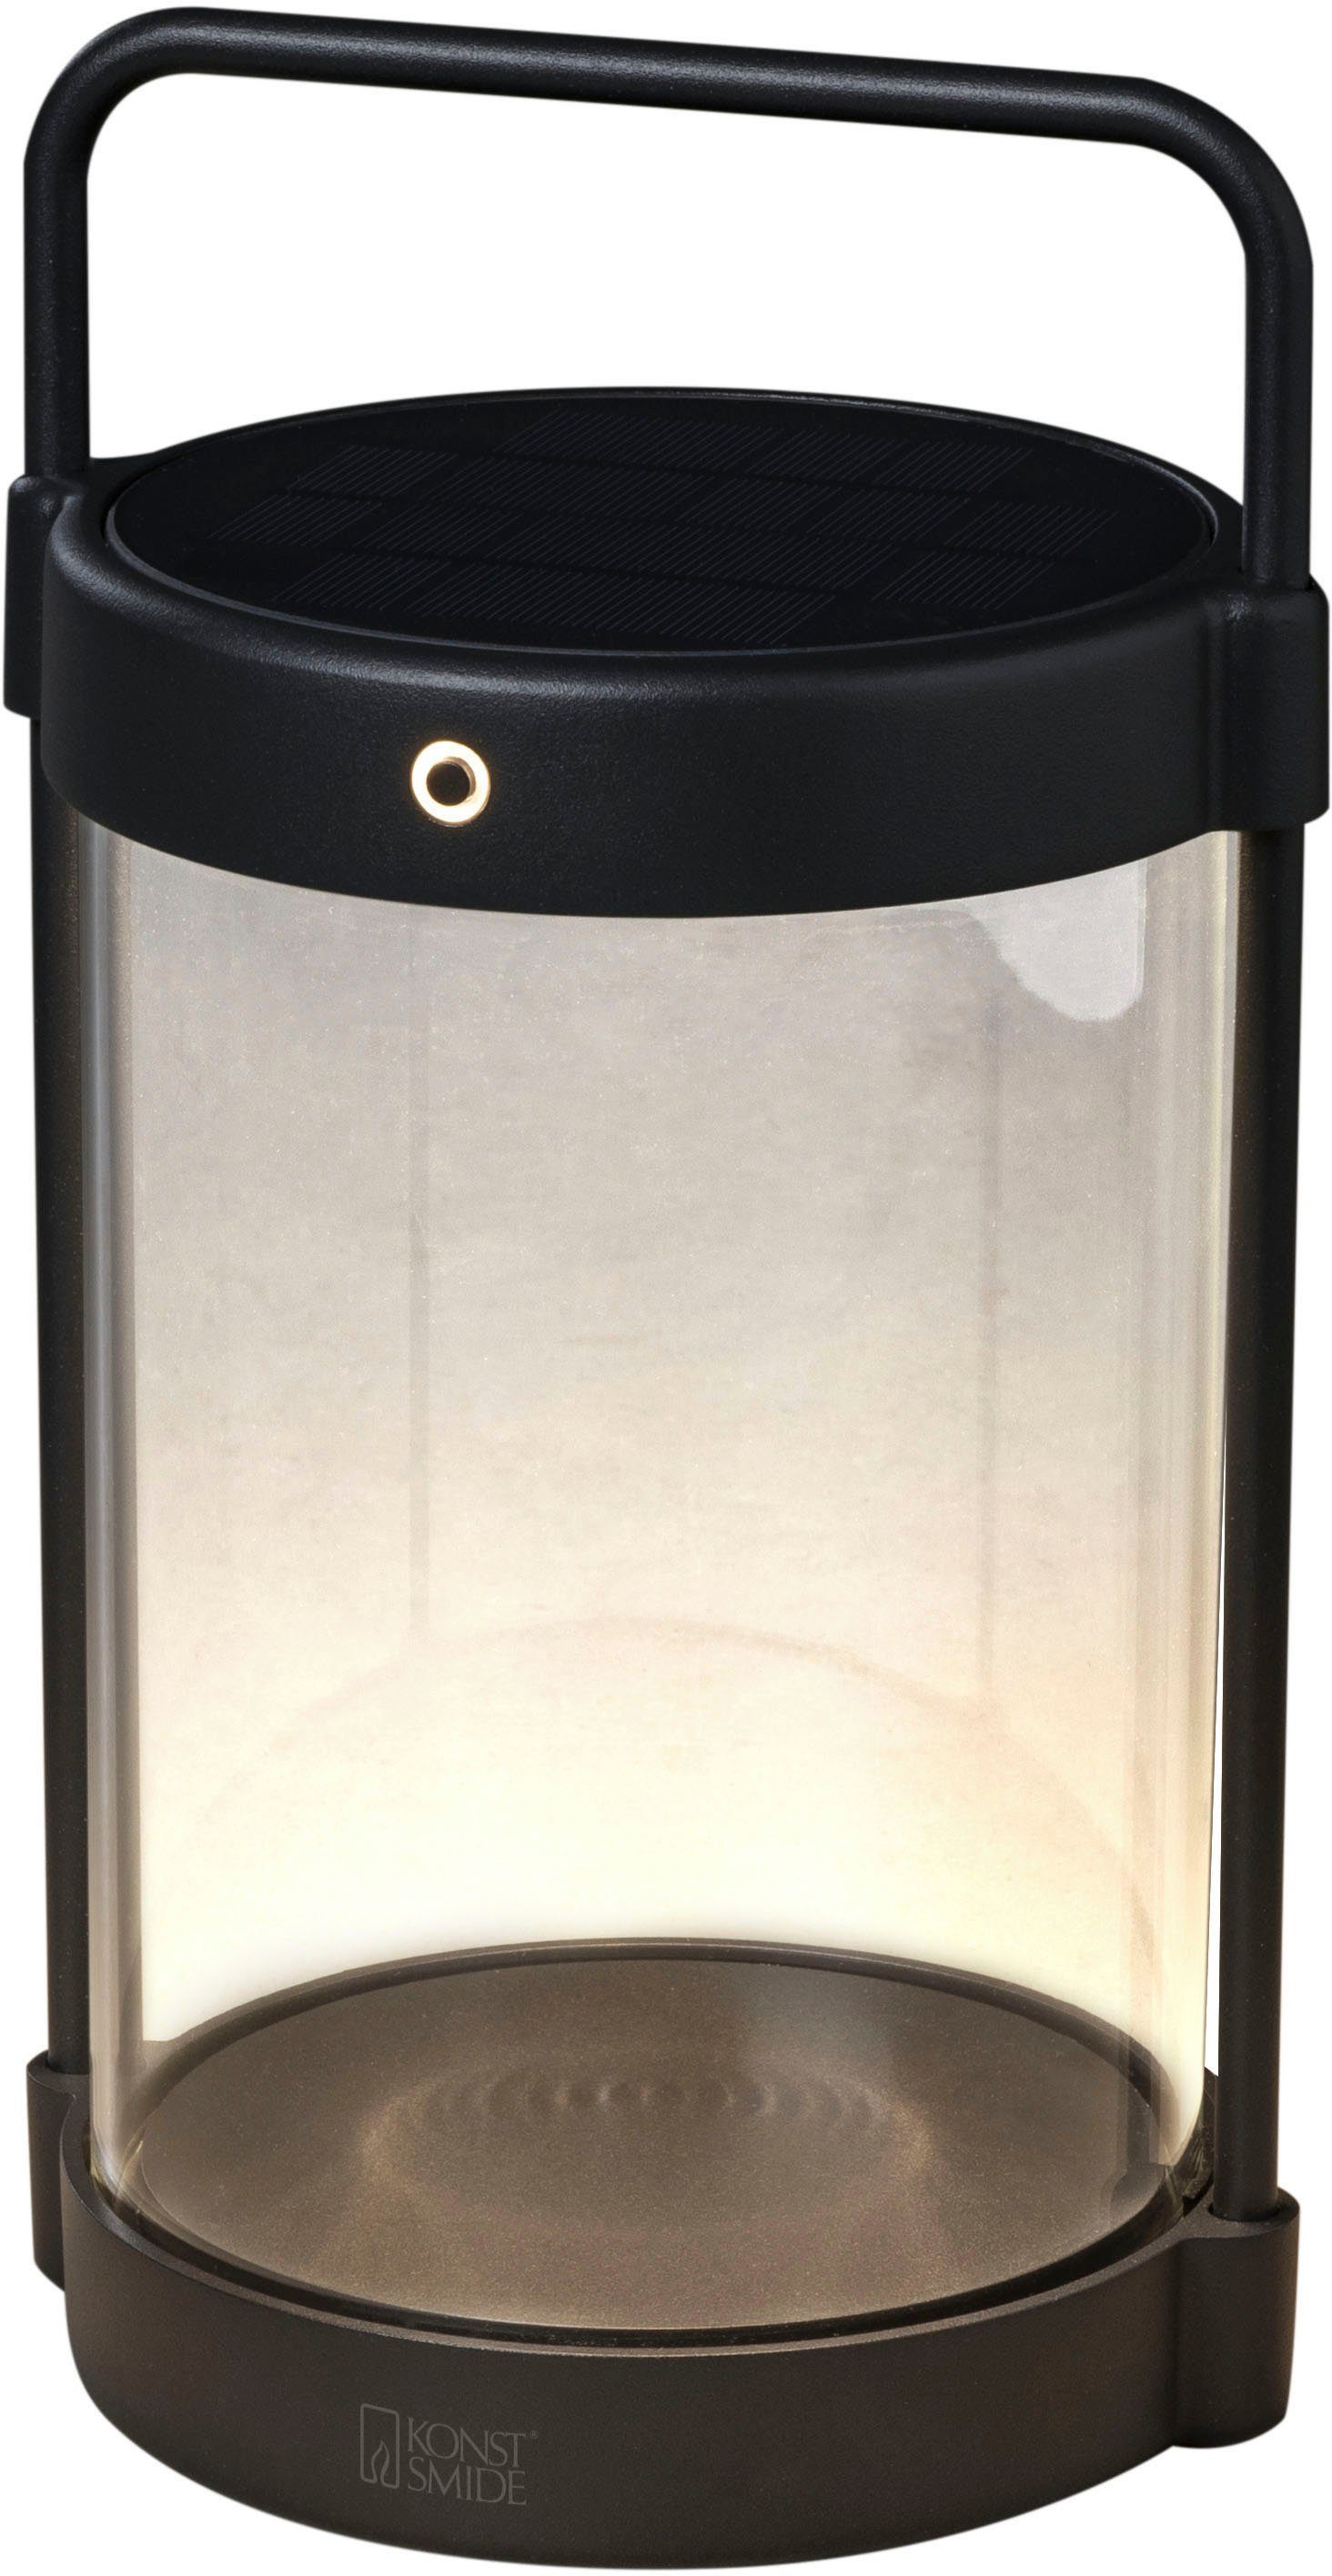 KONSTSMIDE LED Laterne Crotone, schwarz, dimmbar, LED Dammerungs fest Crotone Solar/USB-Laterne integriert, Warmweiß, LED